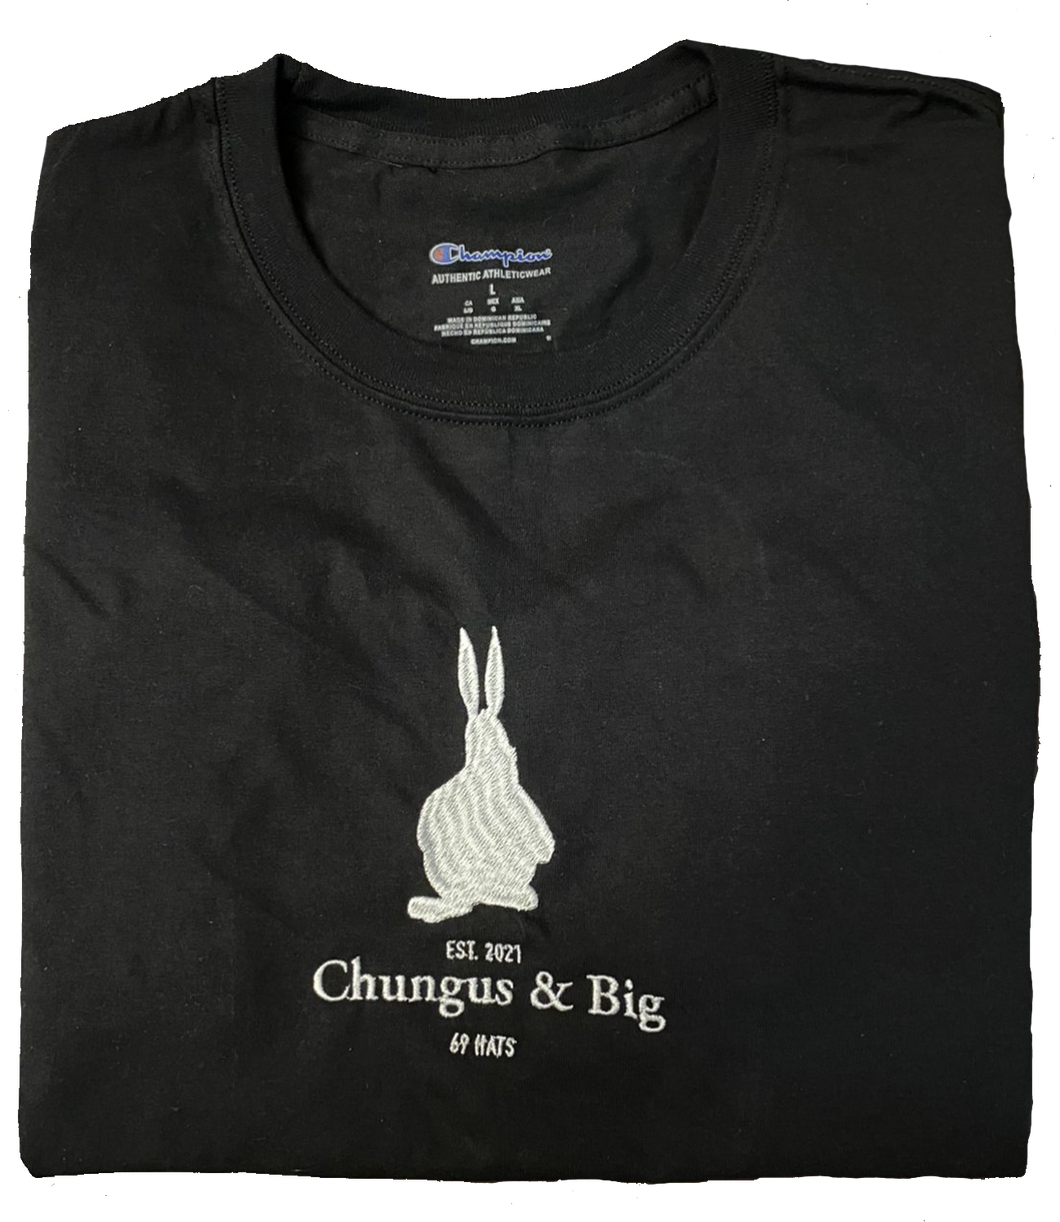 Chungus & Big Shirt - Black